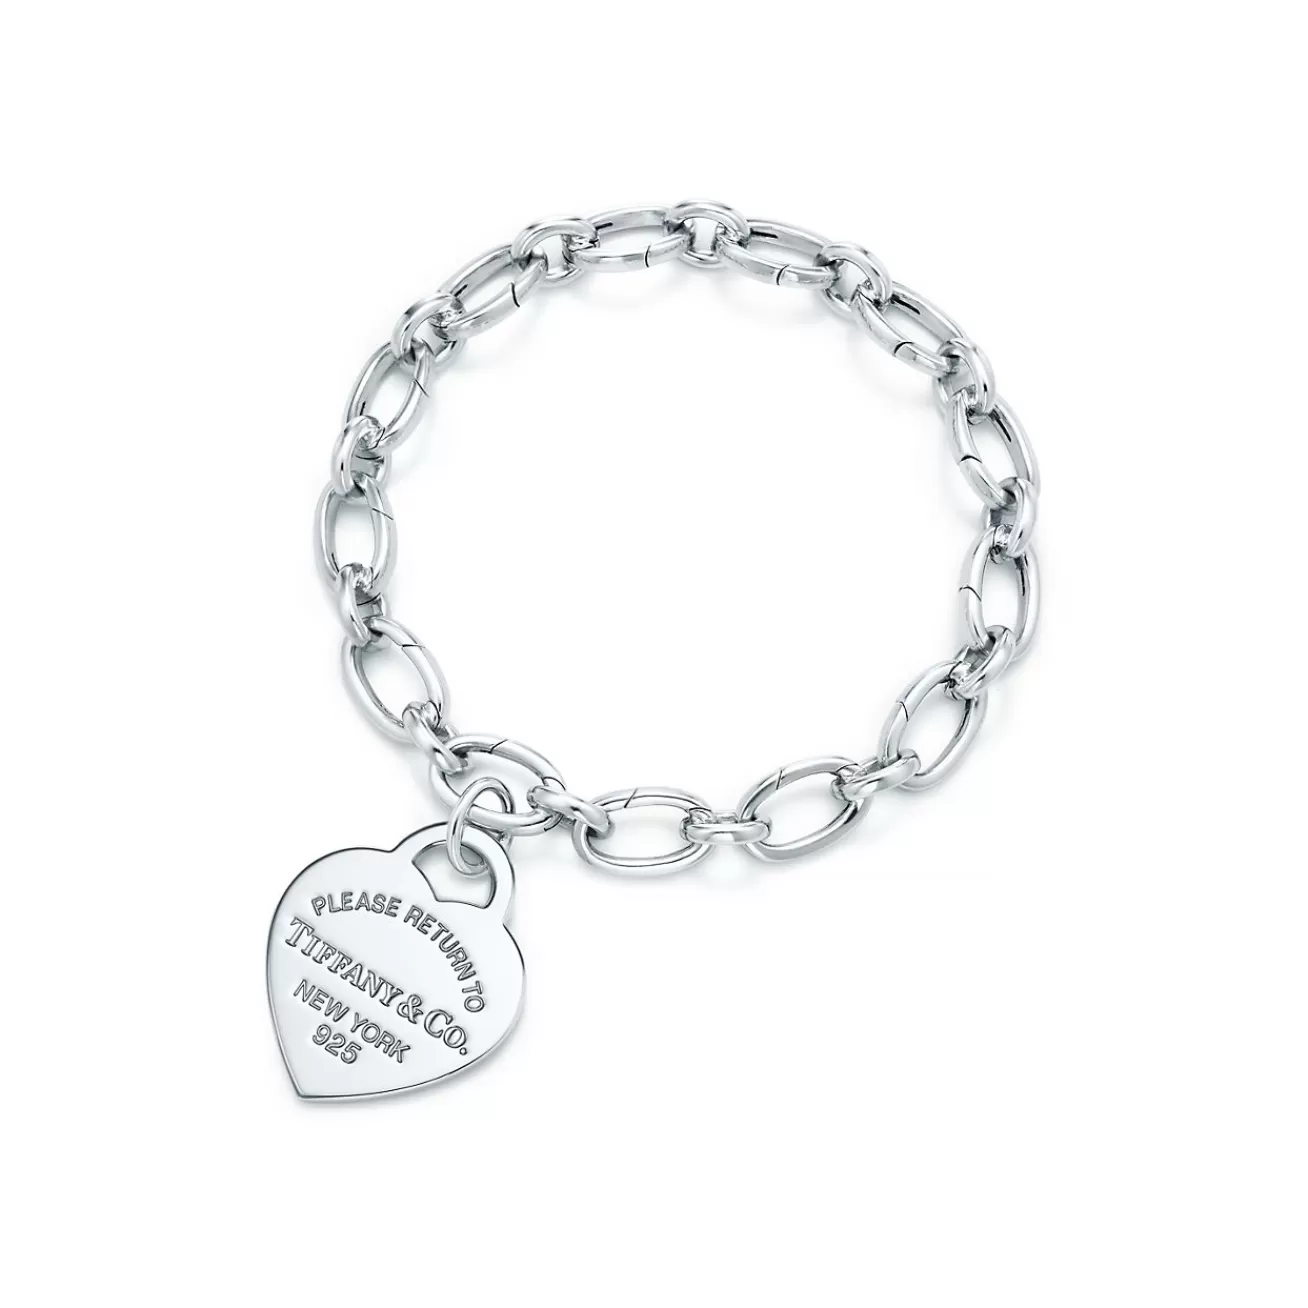 Tiffany & Co. Return to Tiffany™ heart tag charm in sterling silver on a bracelet. | ^ Bracelets | Sterling Silver Jewelry